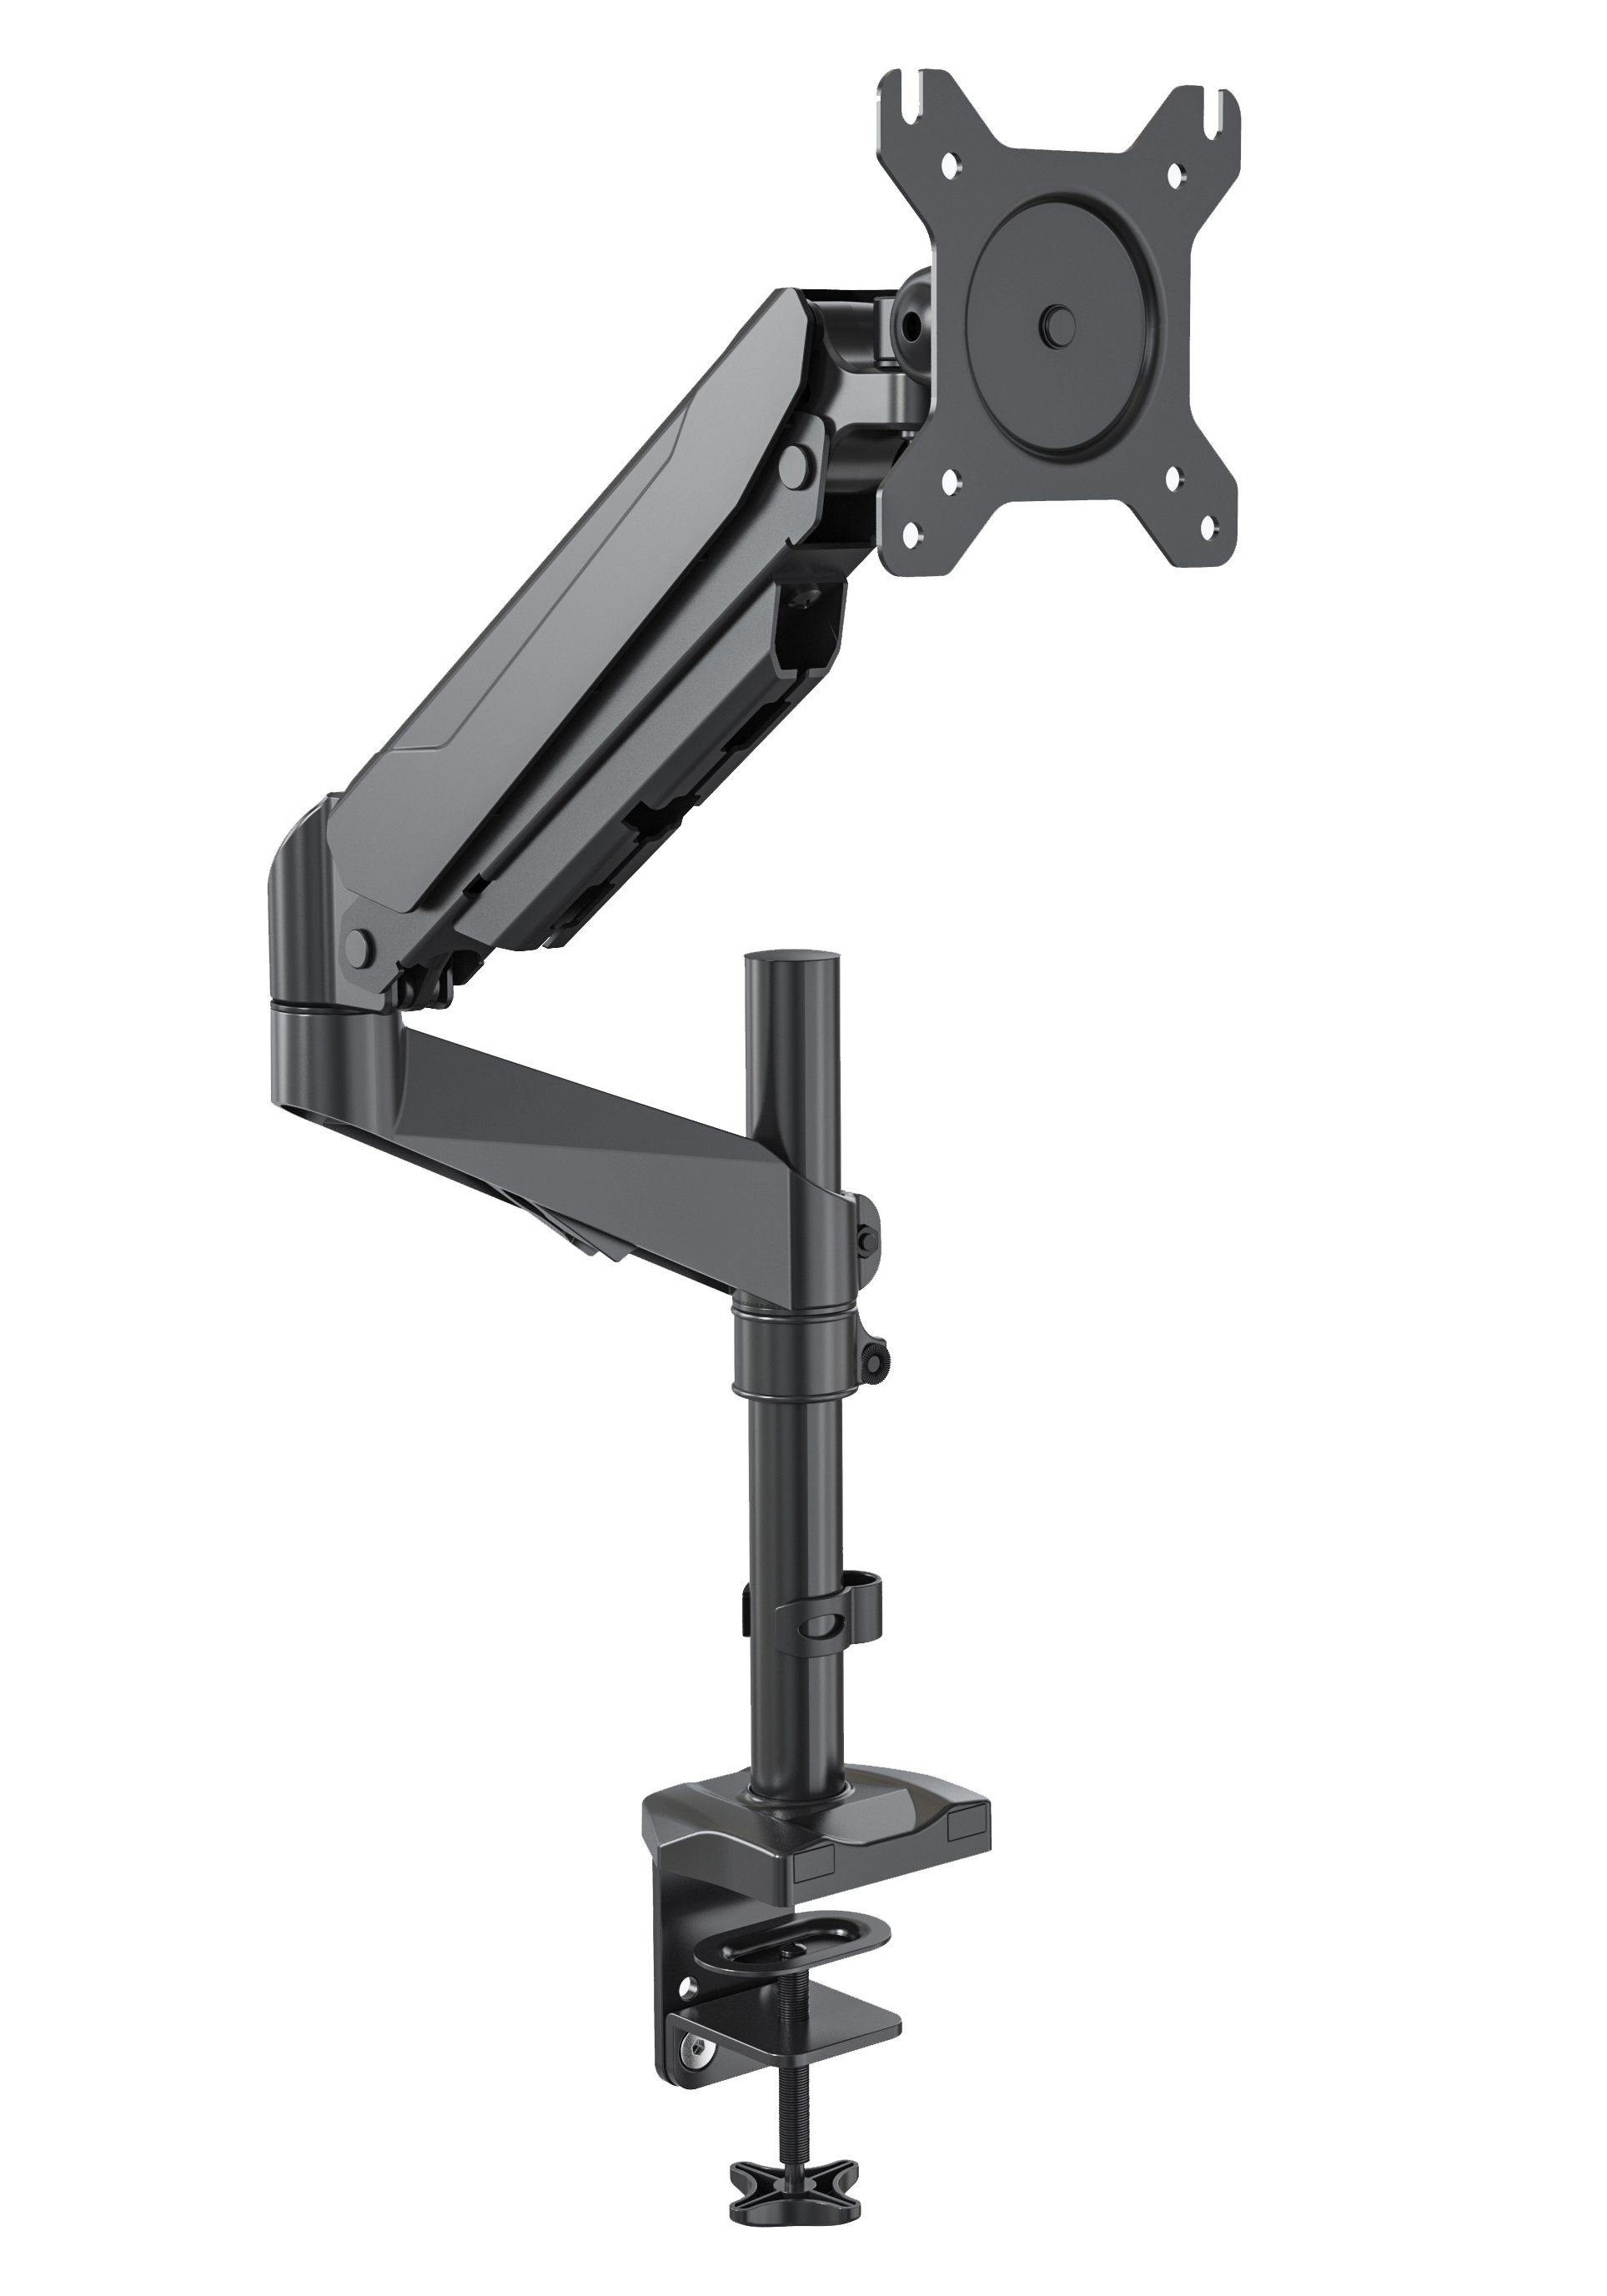  Gas Spring DeskClamp & Grommet Single Monitor Arm Support up to 34'' 10kg; Tilt, Swivel, Rotate, VESA 75/100  